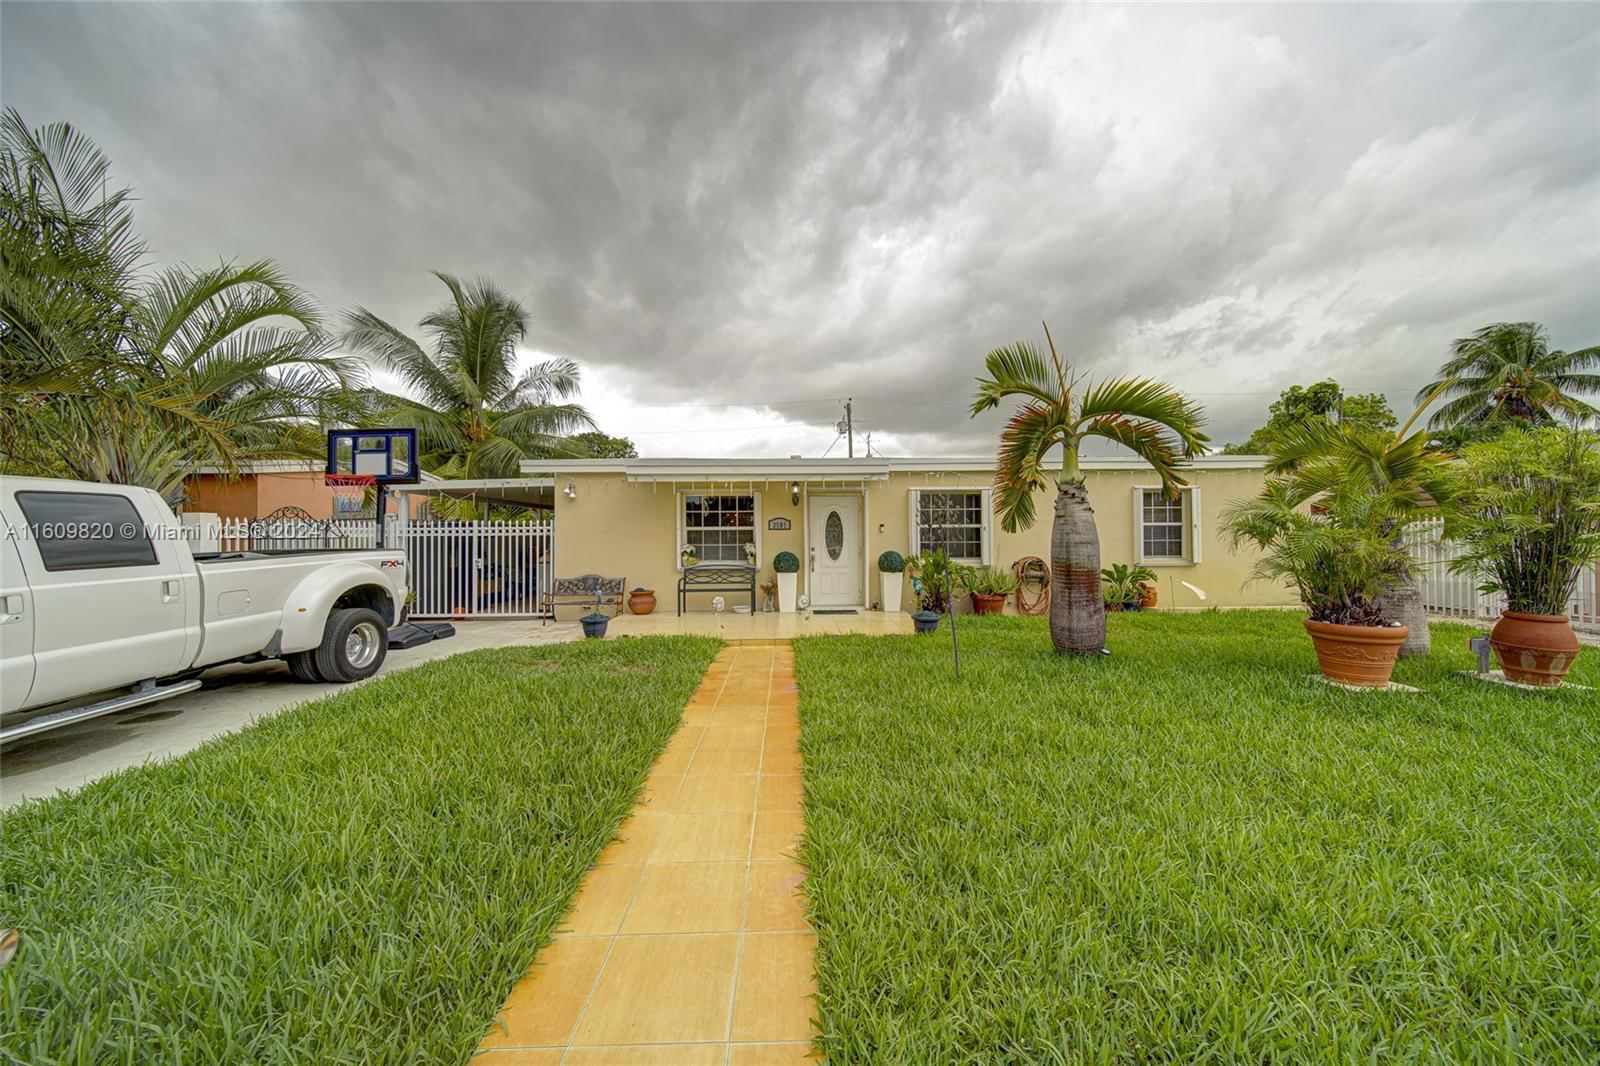 Real estate property located at 3501 95th St, Miami-Dade County, RICMAR HGTS, Miami, FL